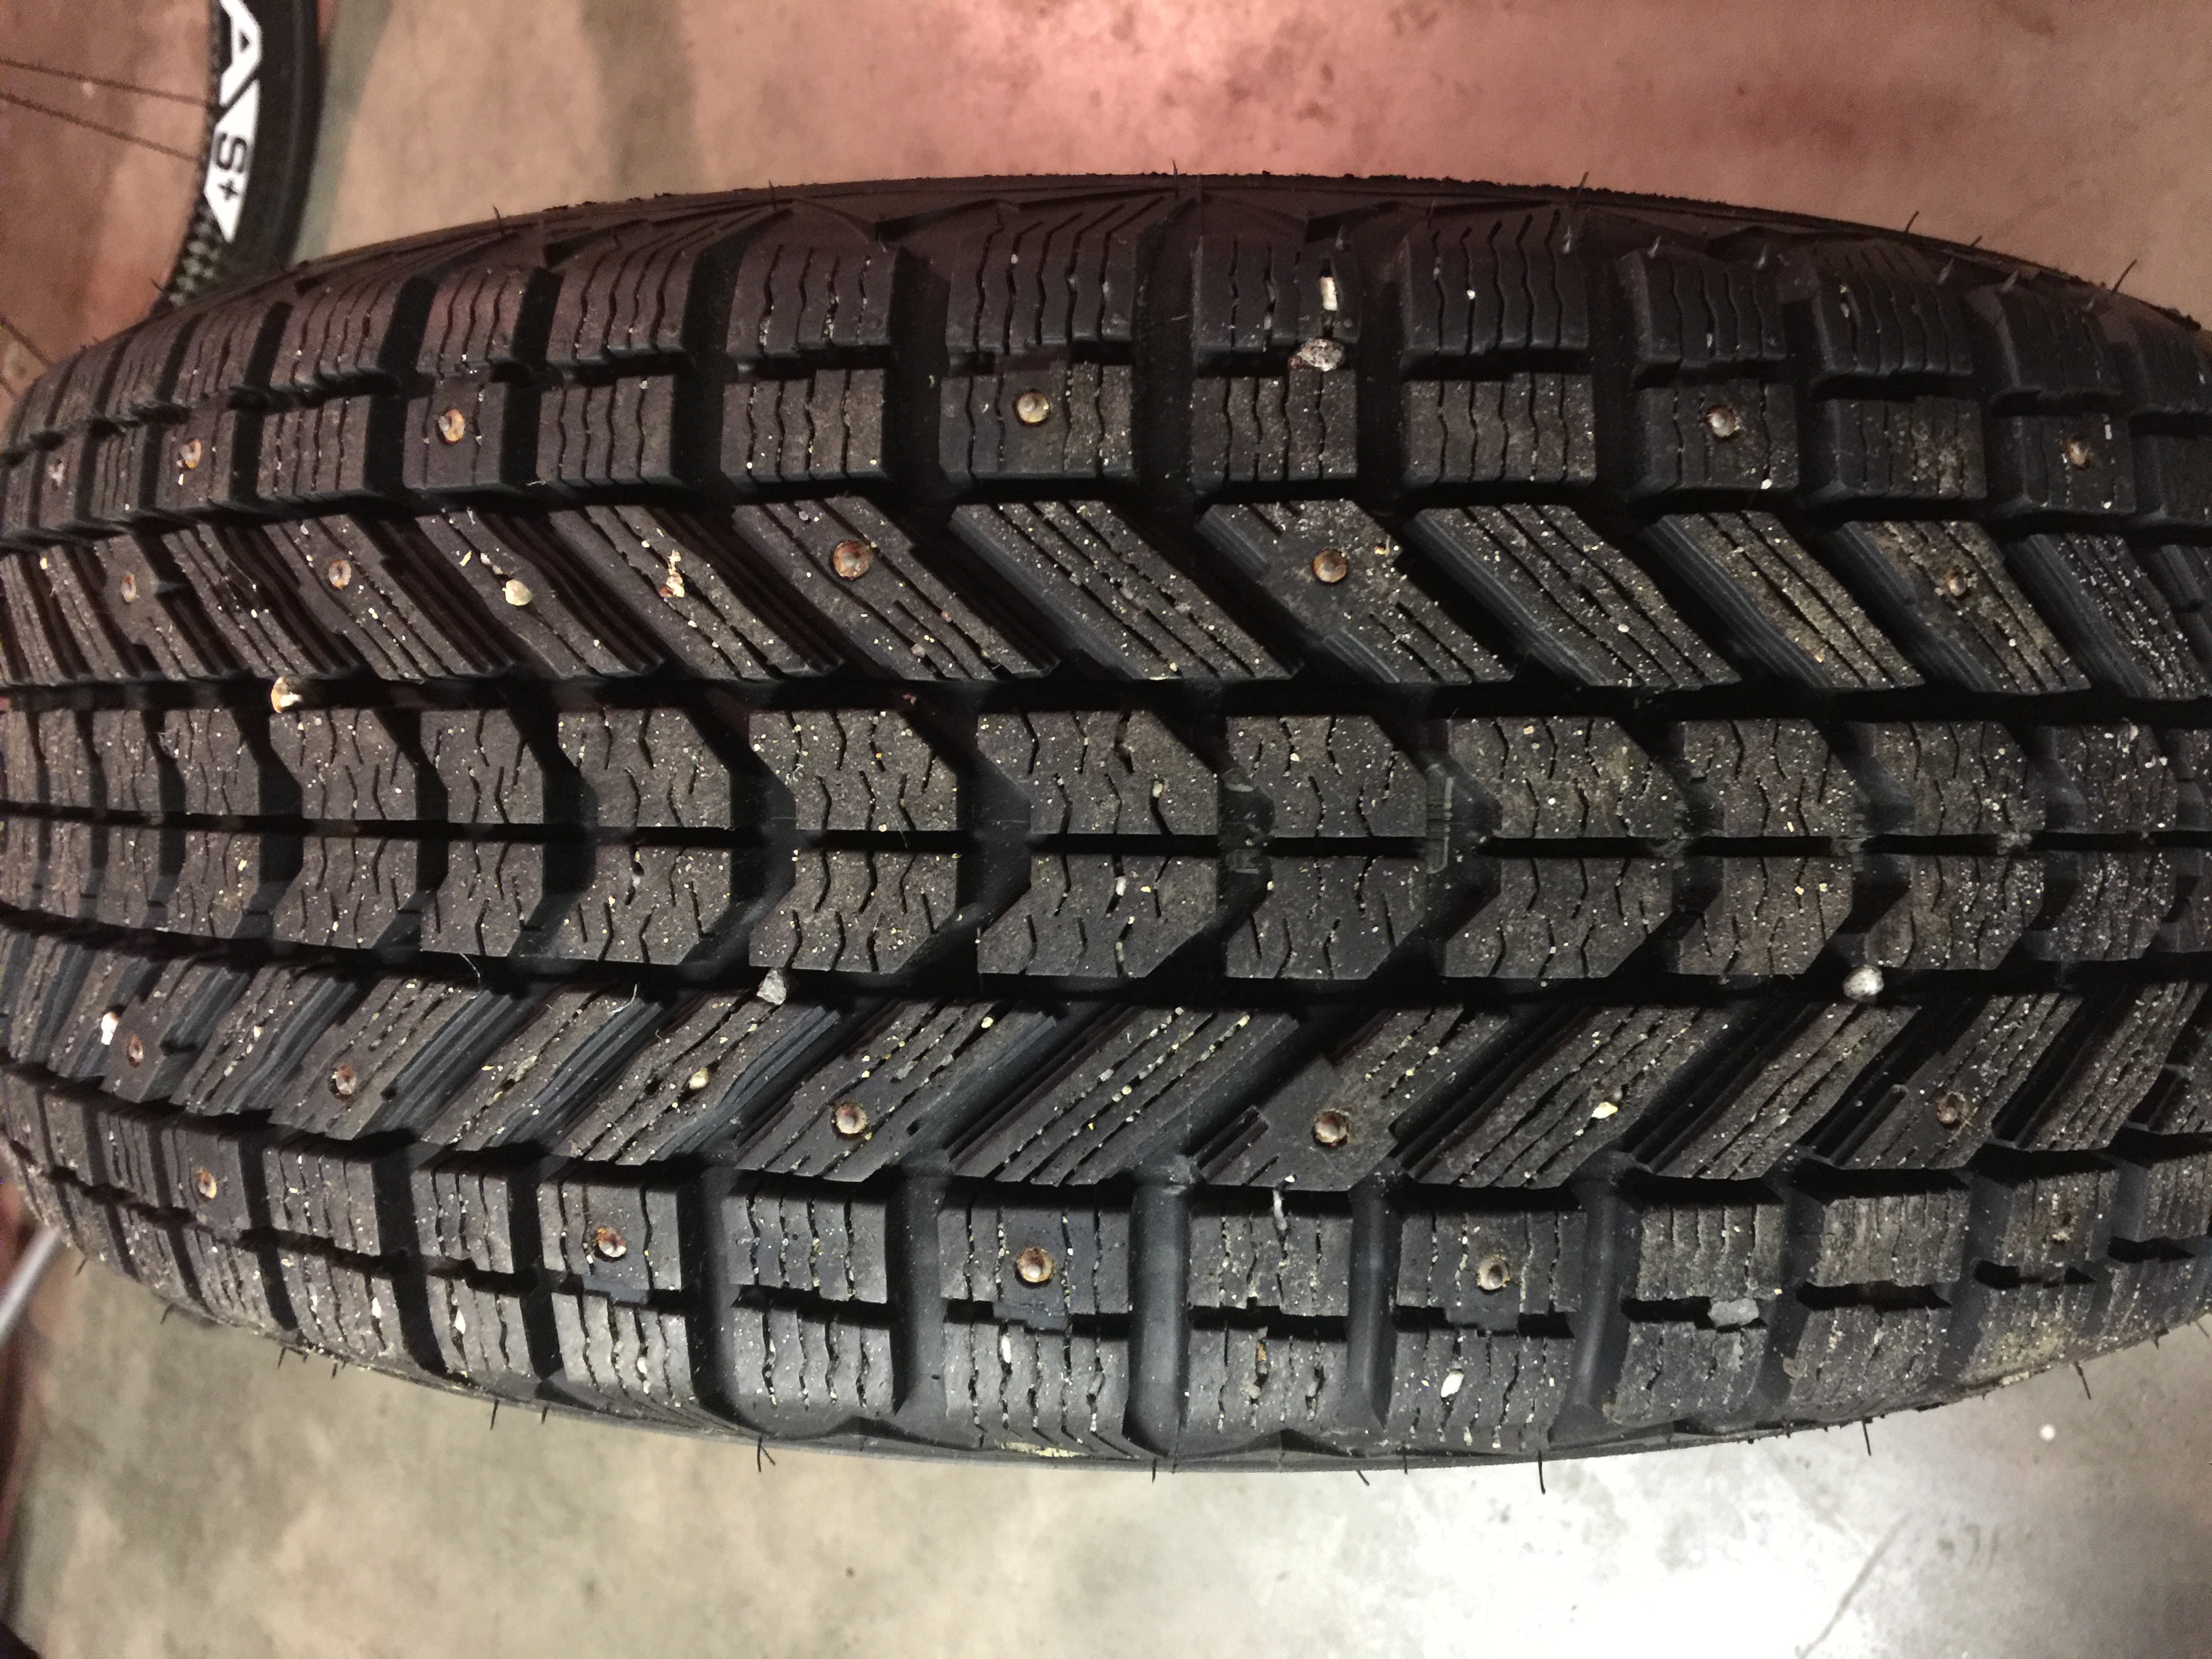 16 studded snow tires